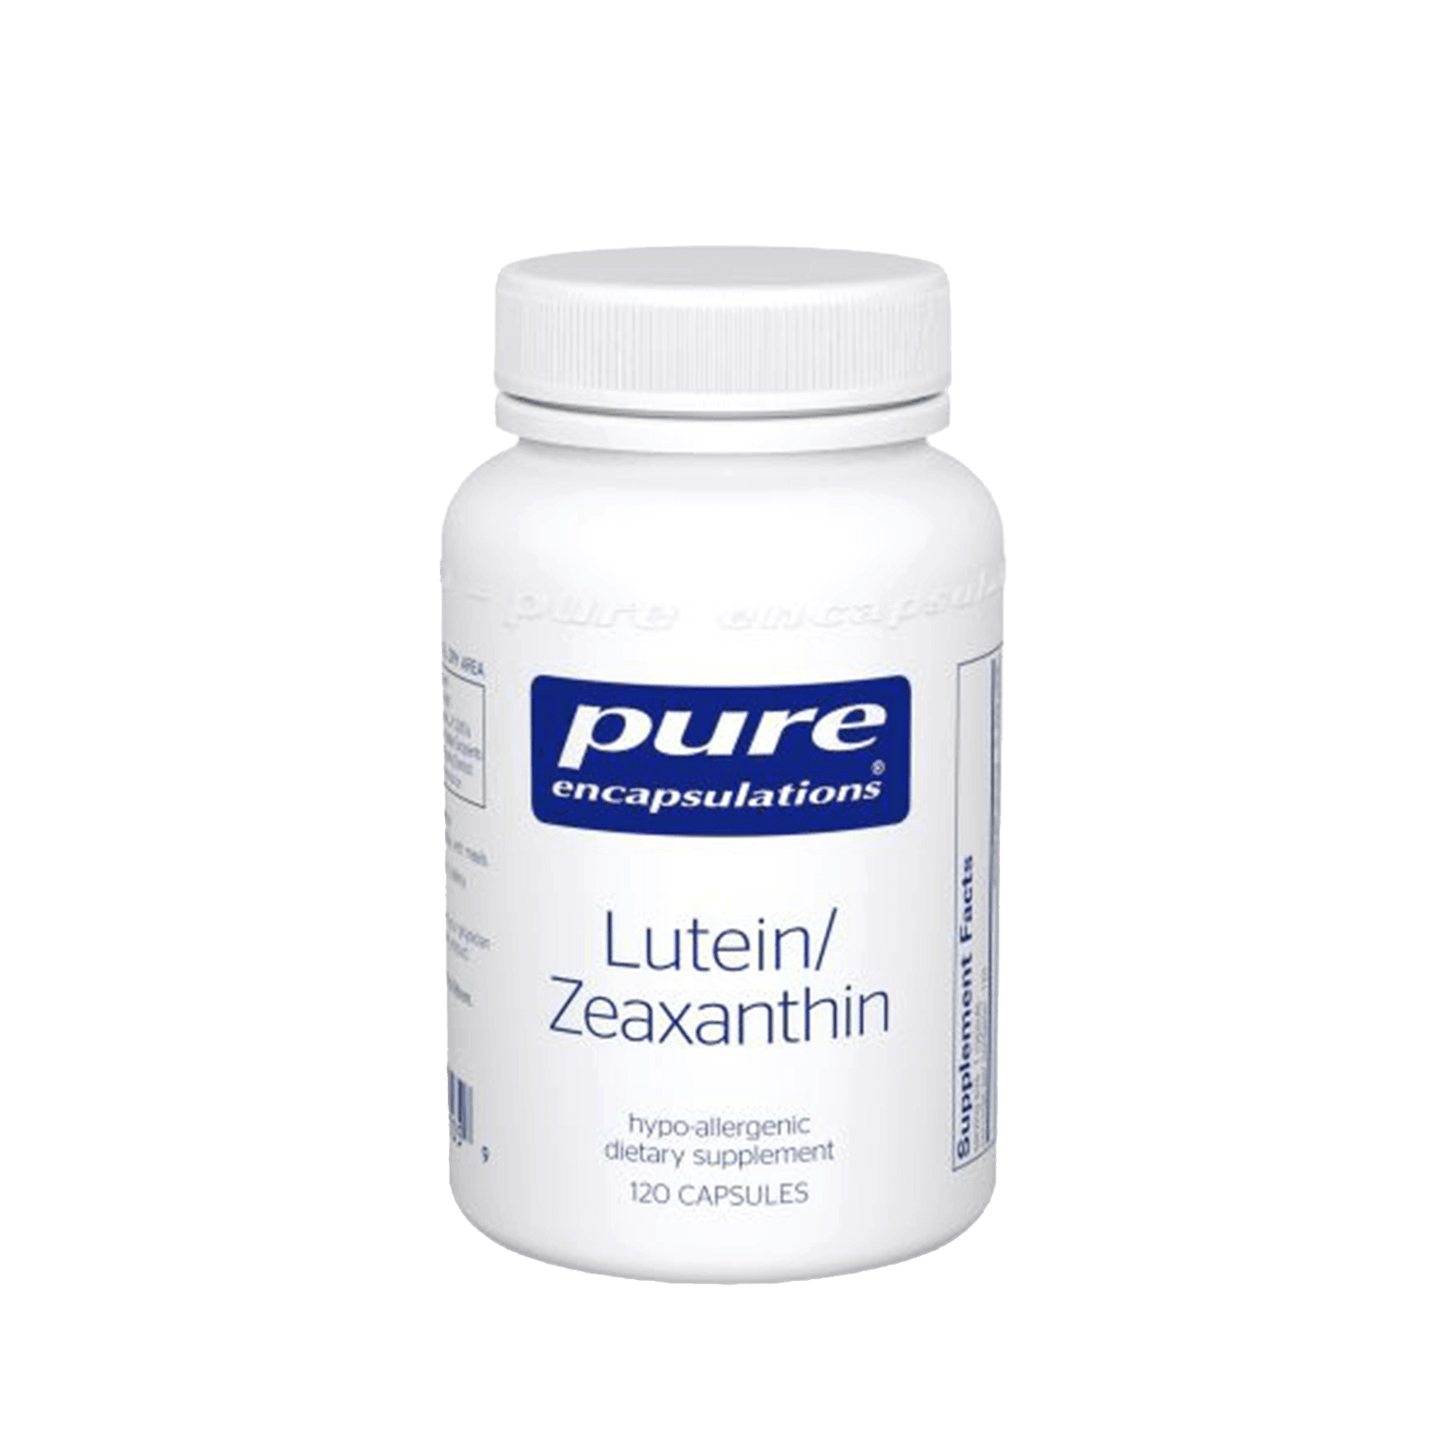 Pure Encapsulations Lutein/Zeaxanthin capsules